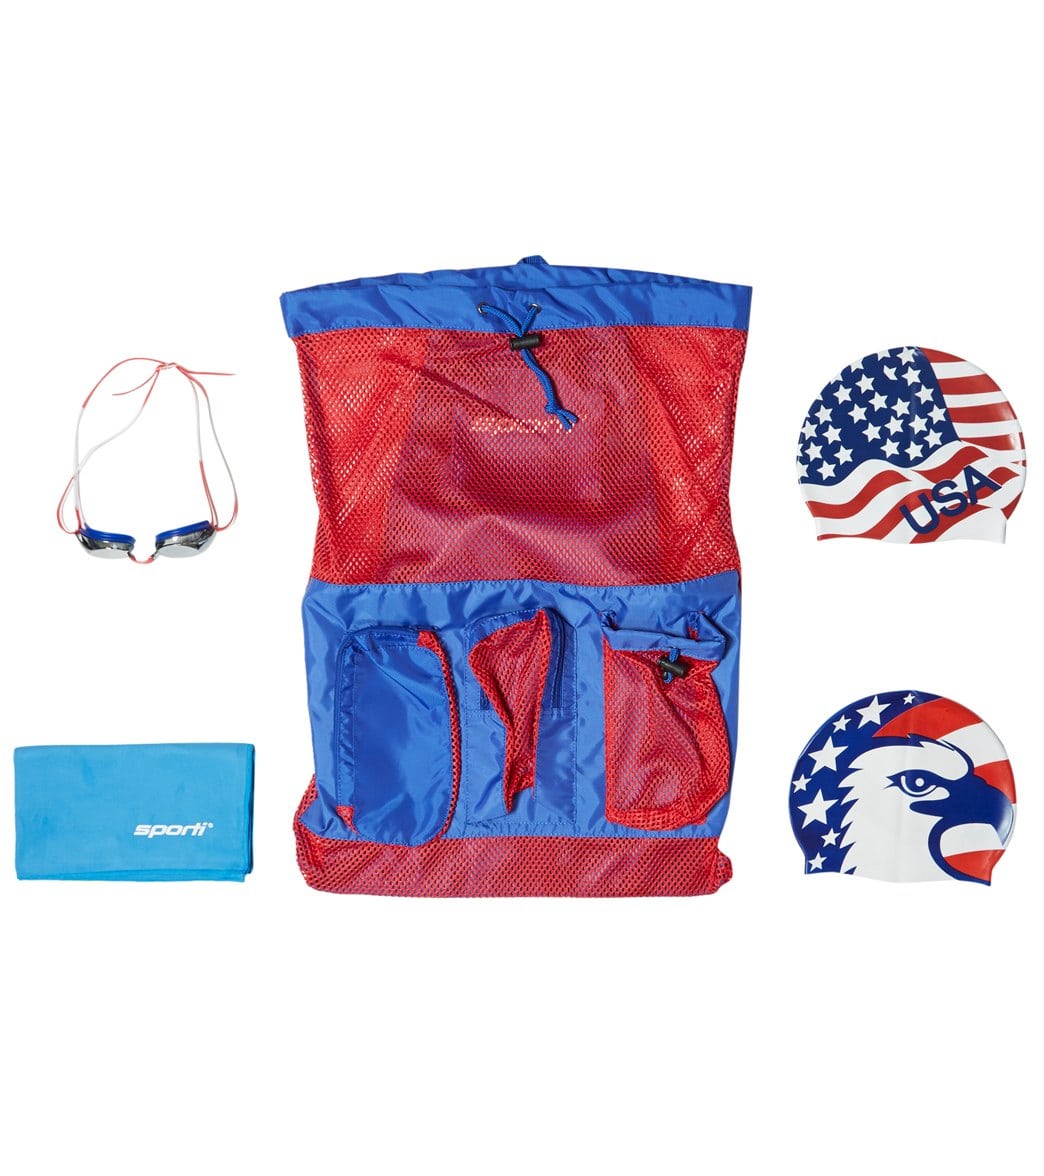 Sporti USA Swim Gear Gift Set at 